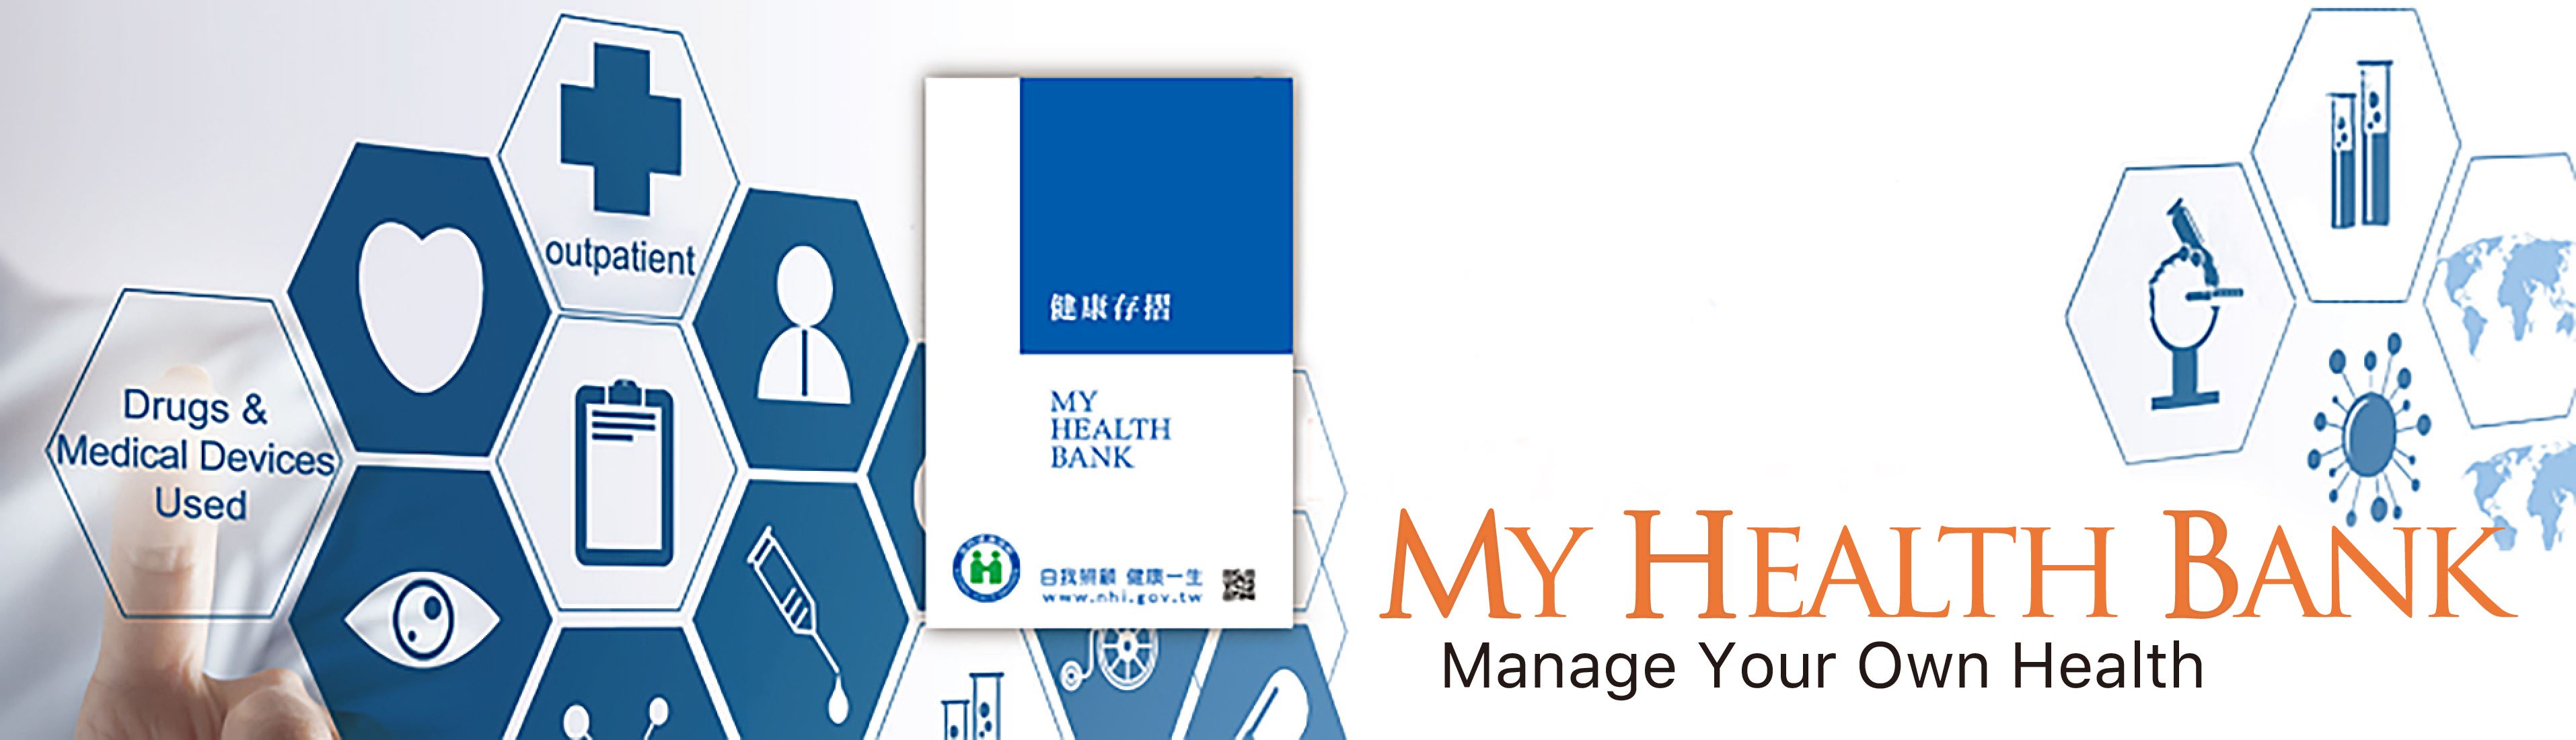 My Health Bank